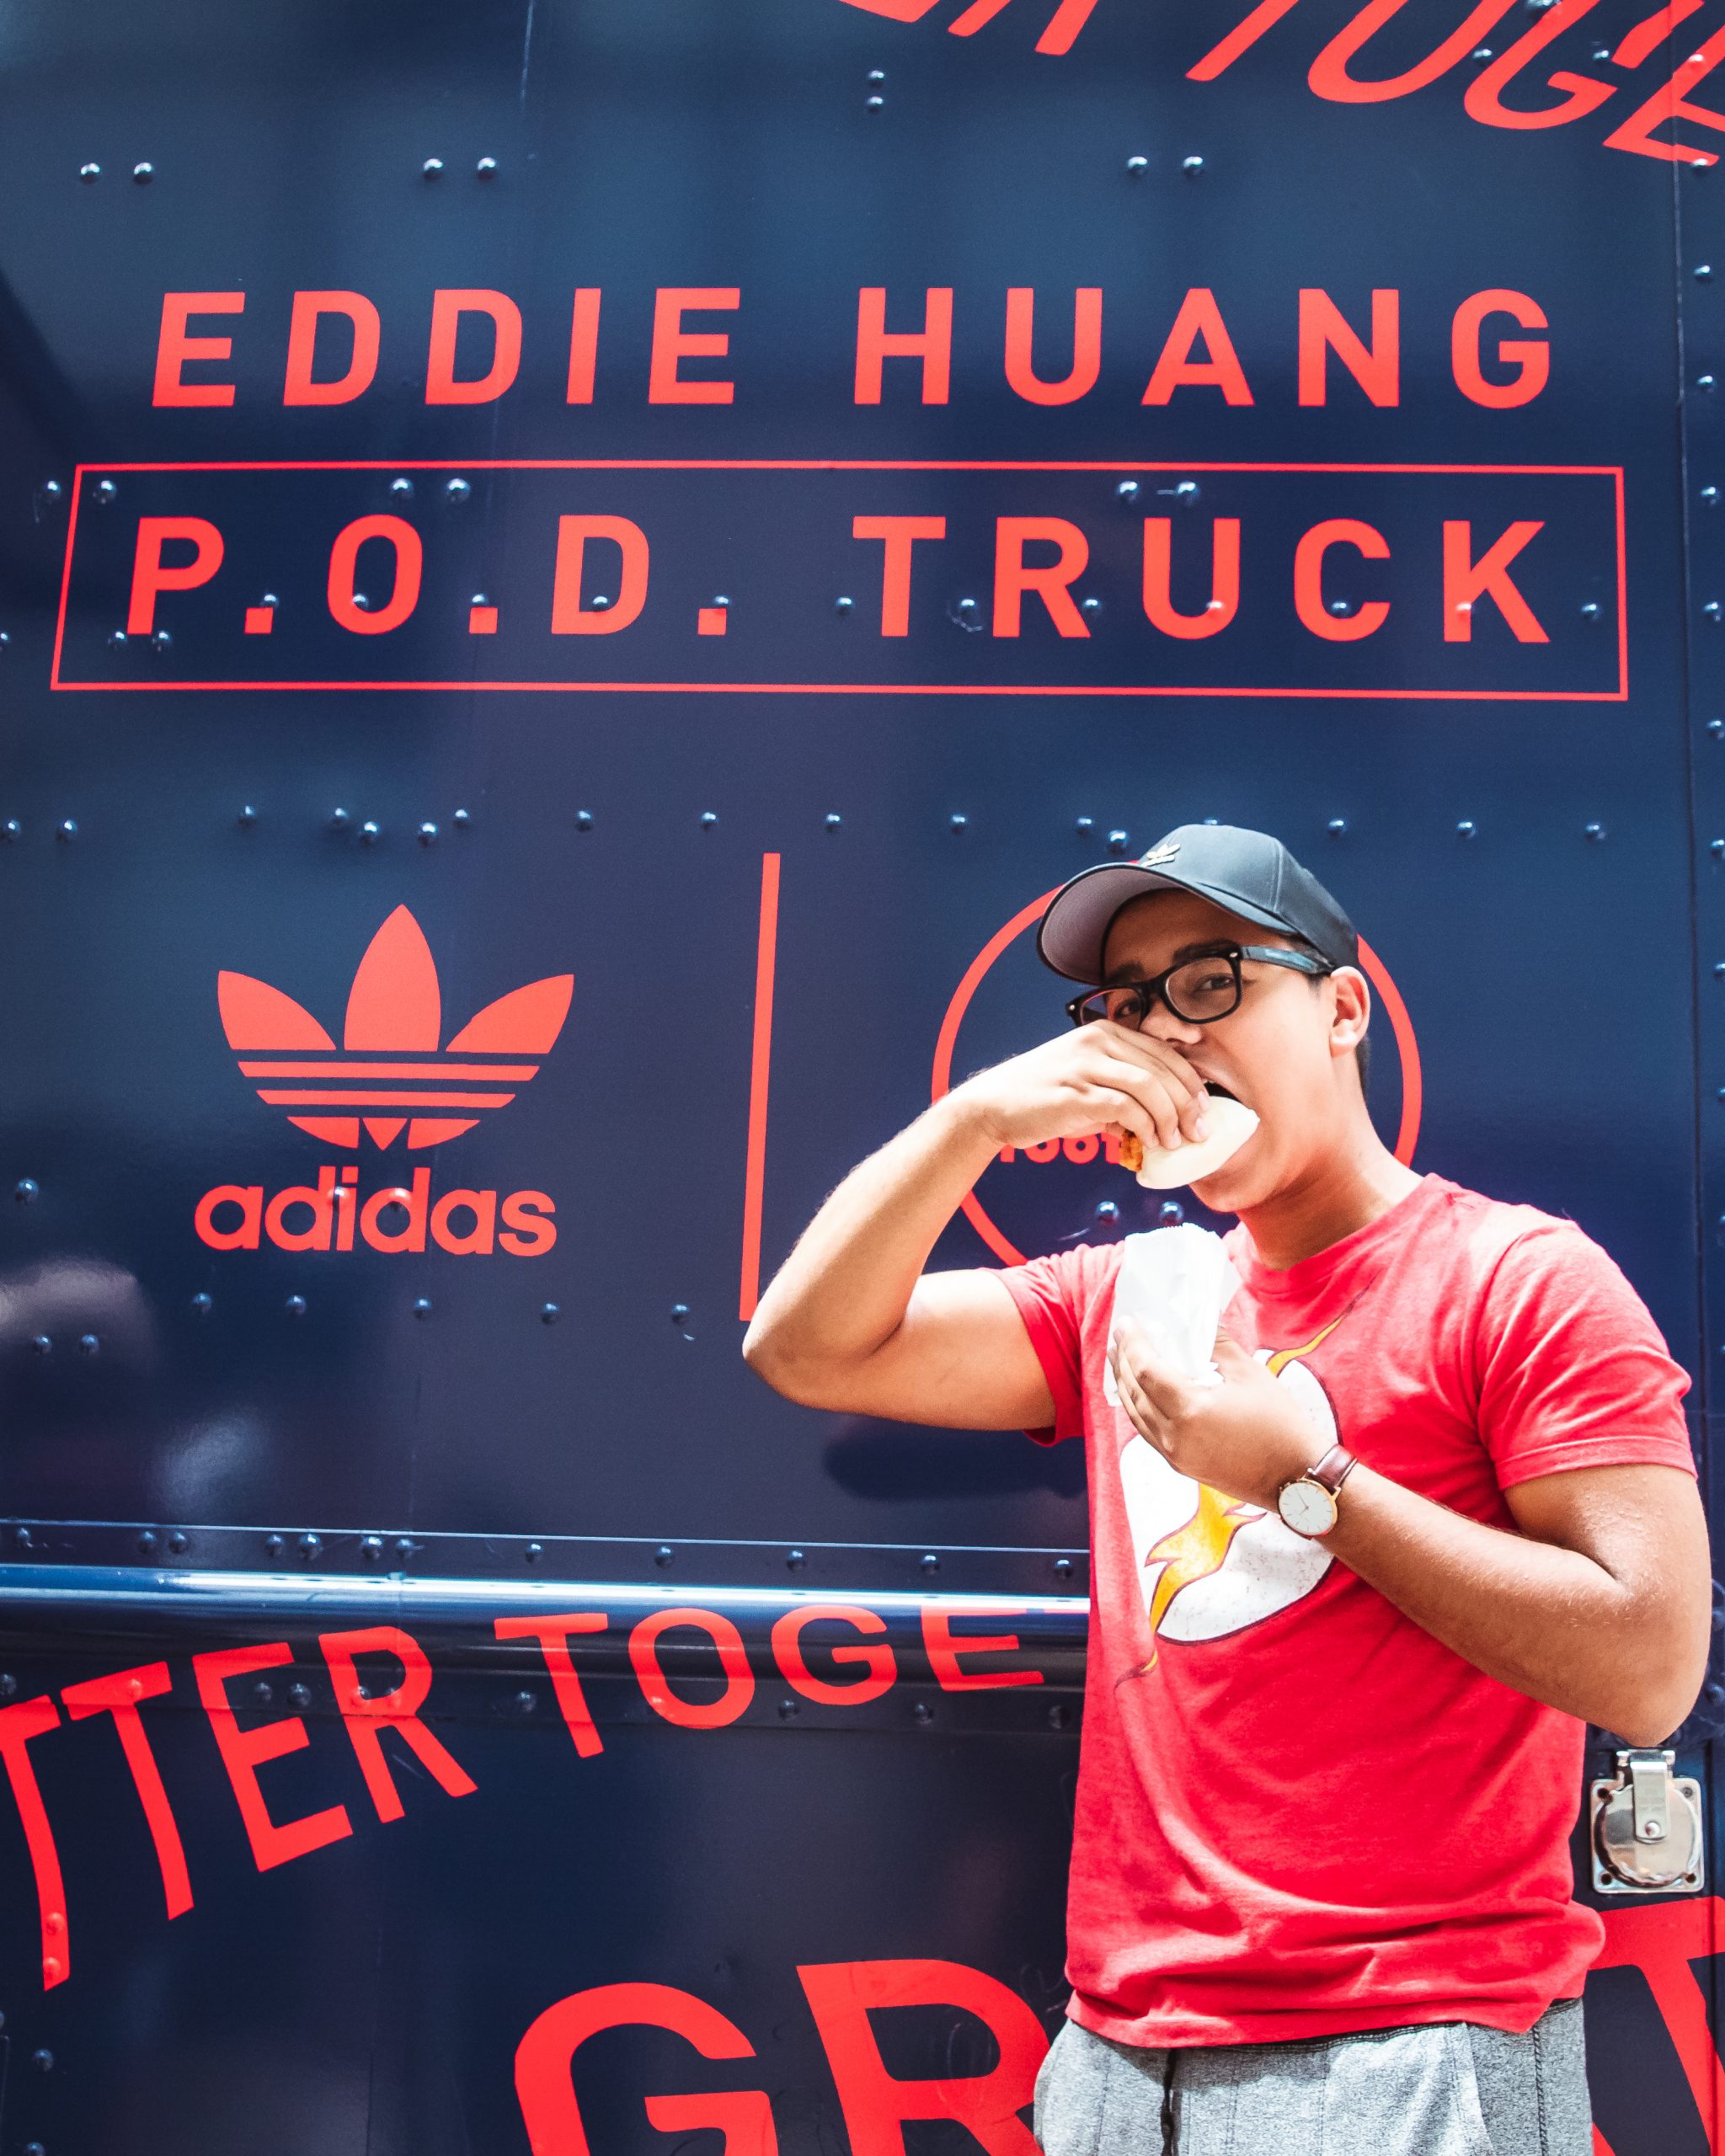 Guest At Adidas P.O.D. Branded Truck Enjoying BaoHaus